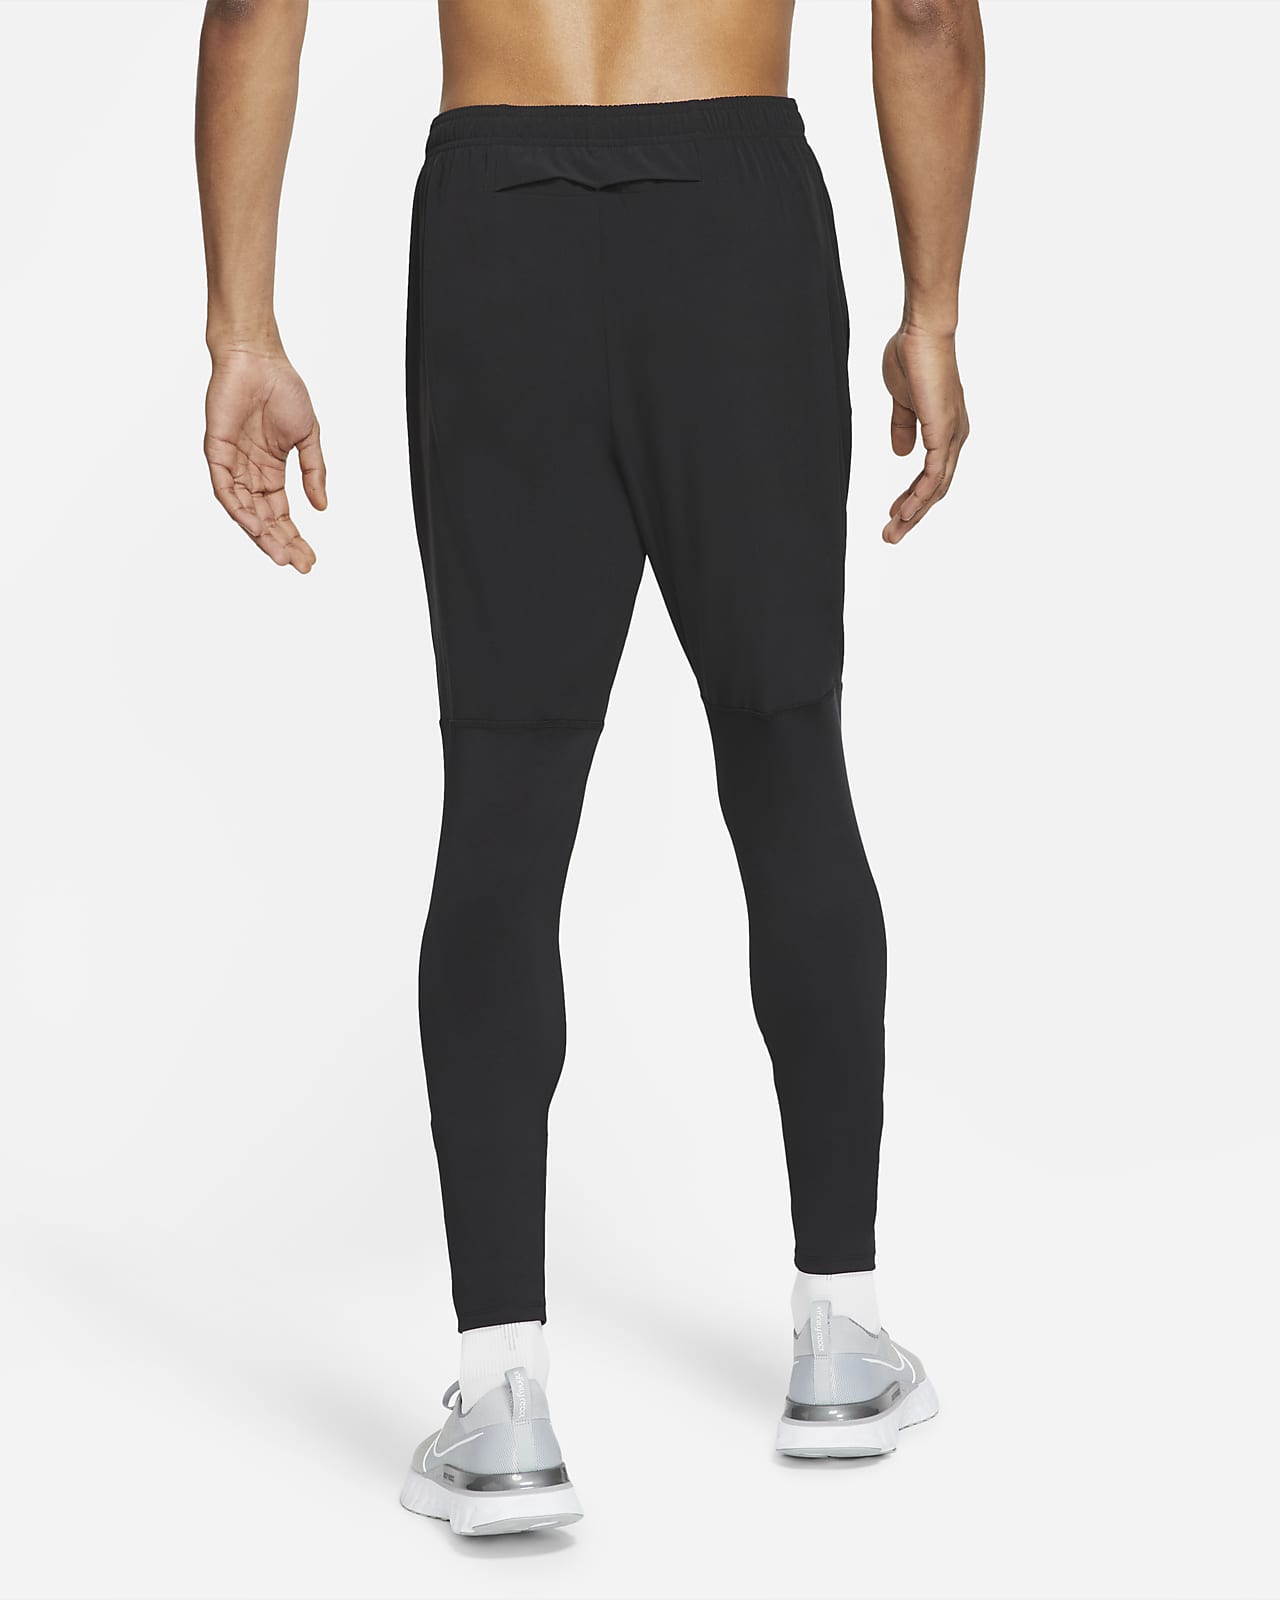 Pantalones de running híbridos de tejido Woven para Nike Dri-FIT UV Challenger. Nike.com